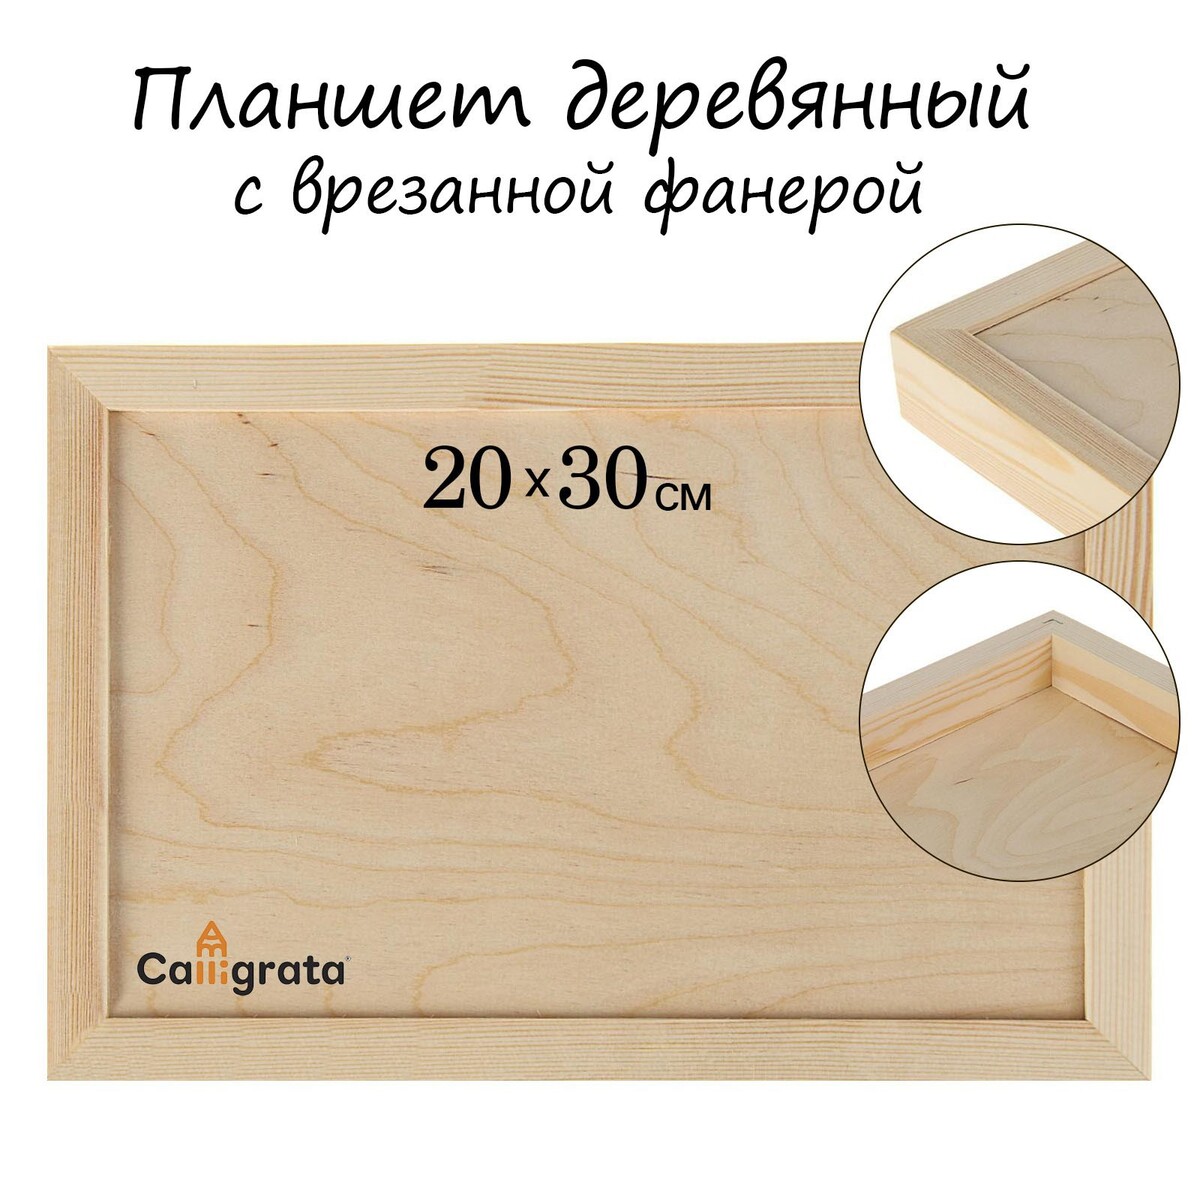 Планшет деревянный, с врезанной фанерой, 20 х 30 х 3,5 см, глубина 0.5 см, сосна планшет деревянный 30 х 40 х 2 см двп